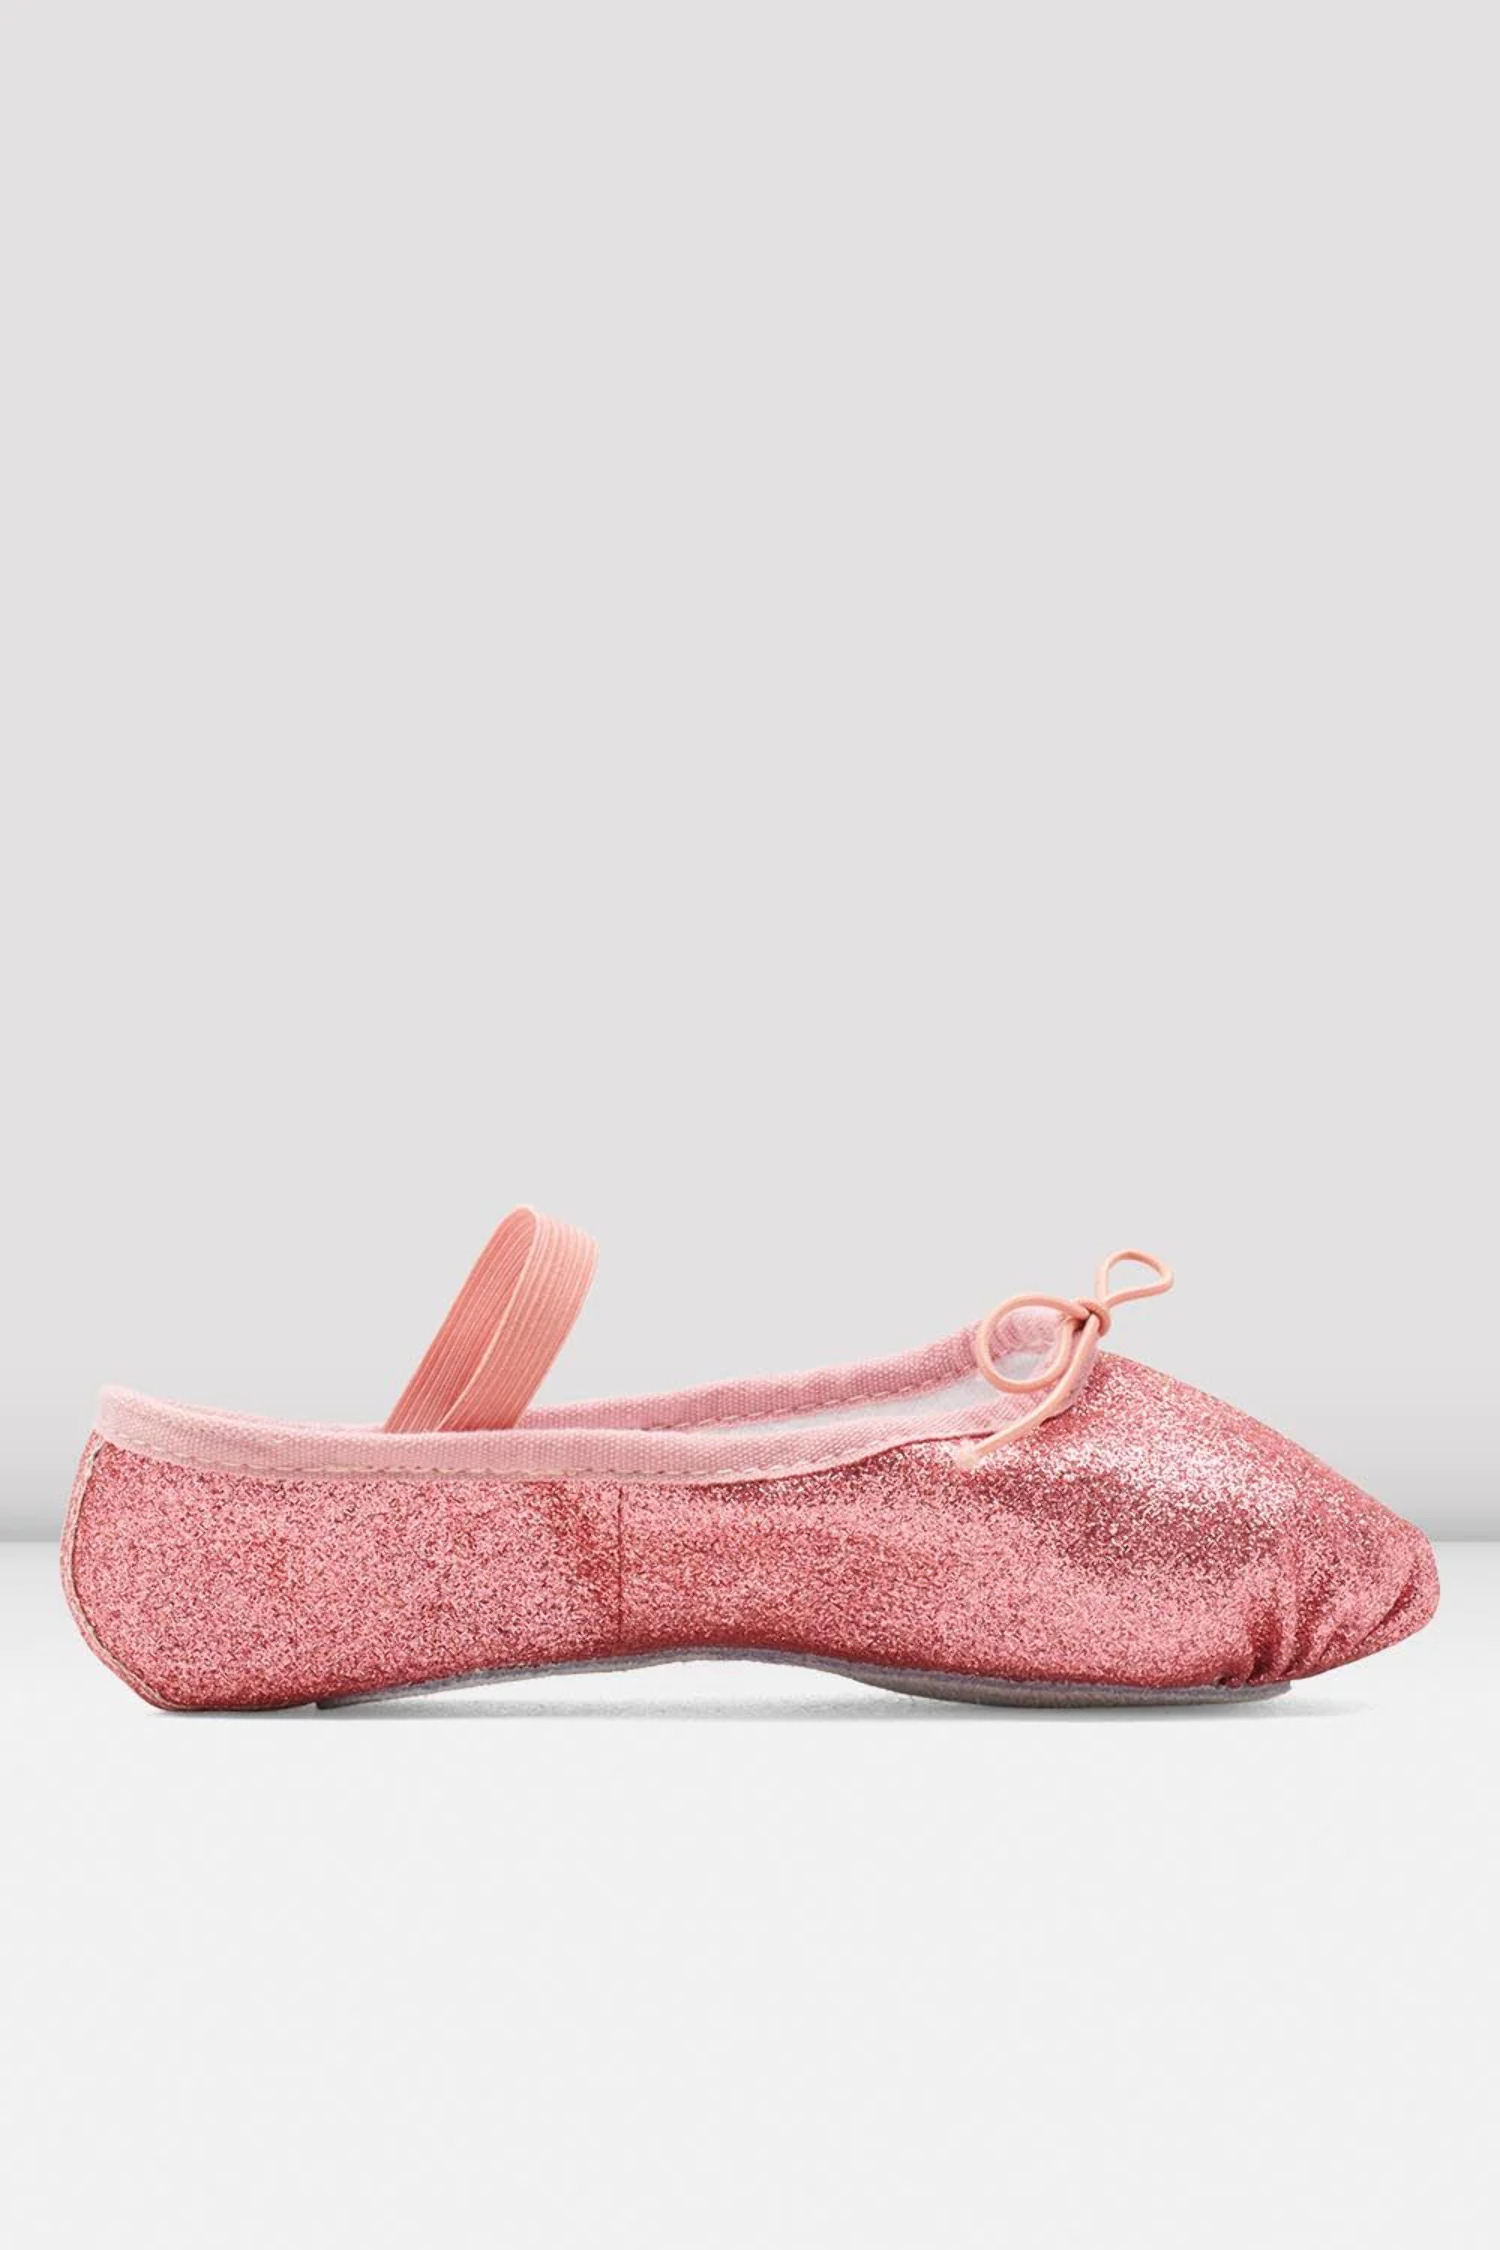 BLOCH Childrens Glitterdust Ballet Shoes, Rose - image 2 of 9